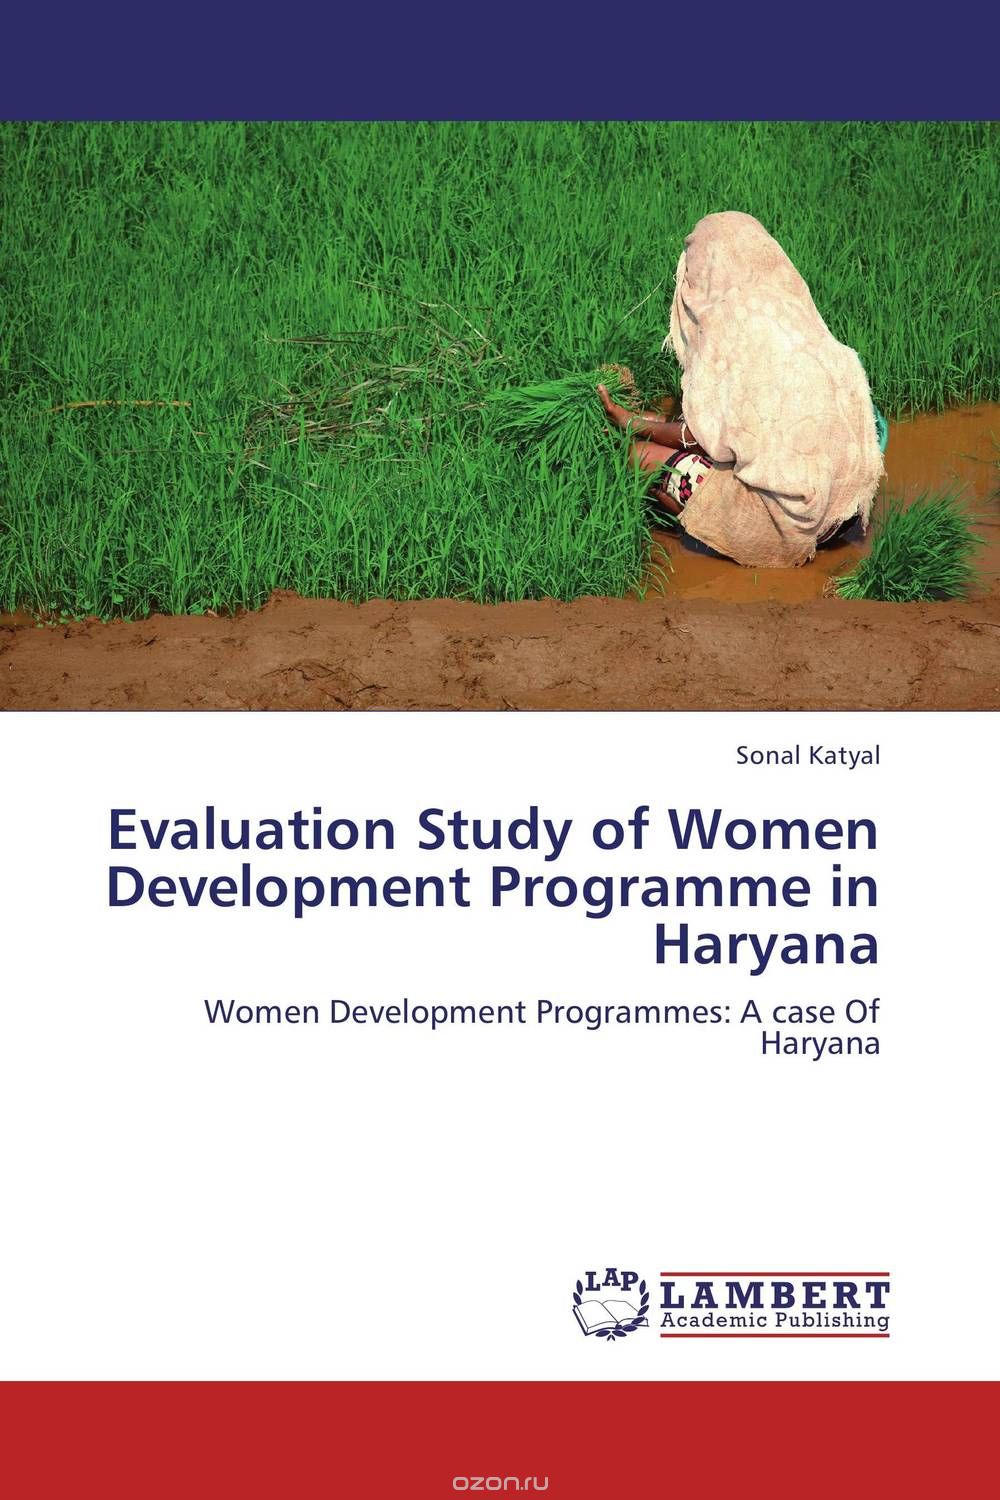 Скачать книгу "Evaluation Study of Women Development Programme in Haryana"